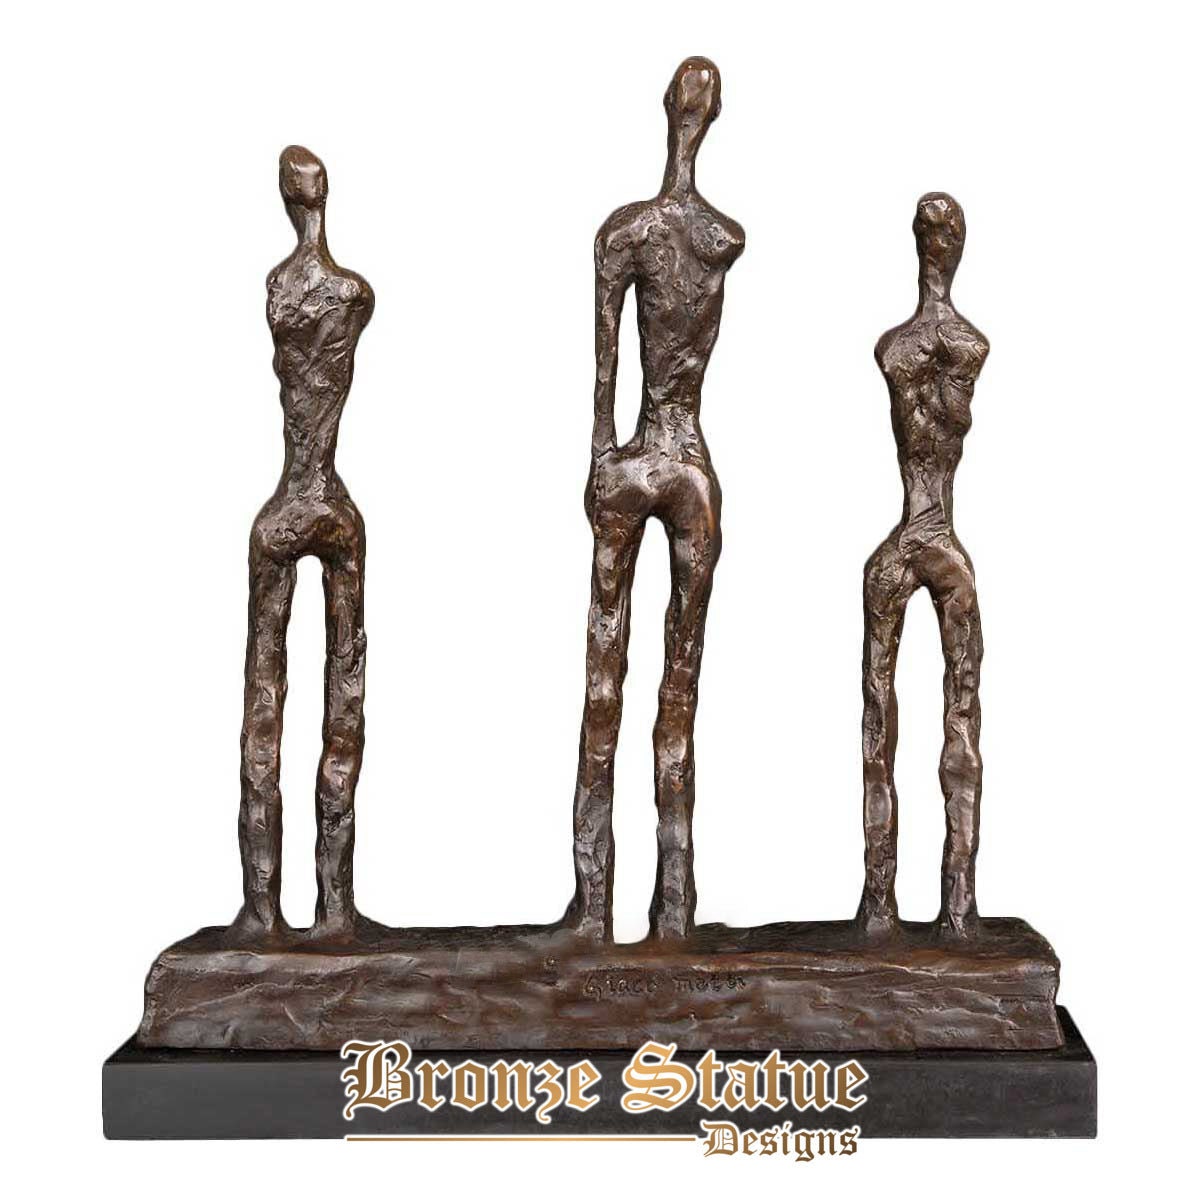 Bronze famous statue giacometti sculpture art replica collectible figurine home indoor decor gifts